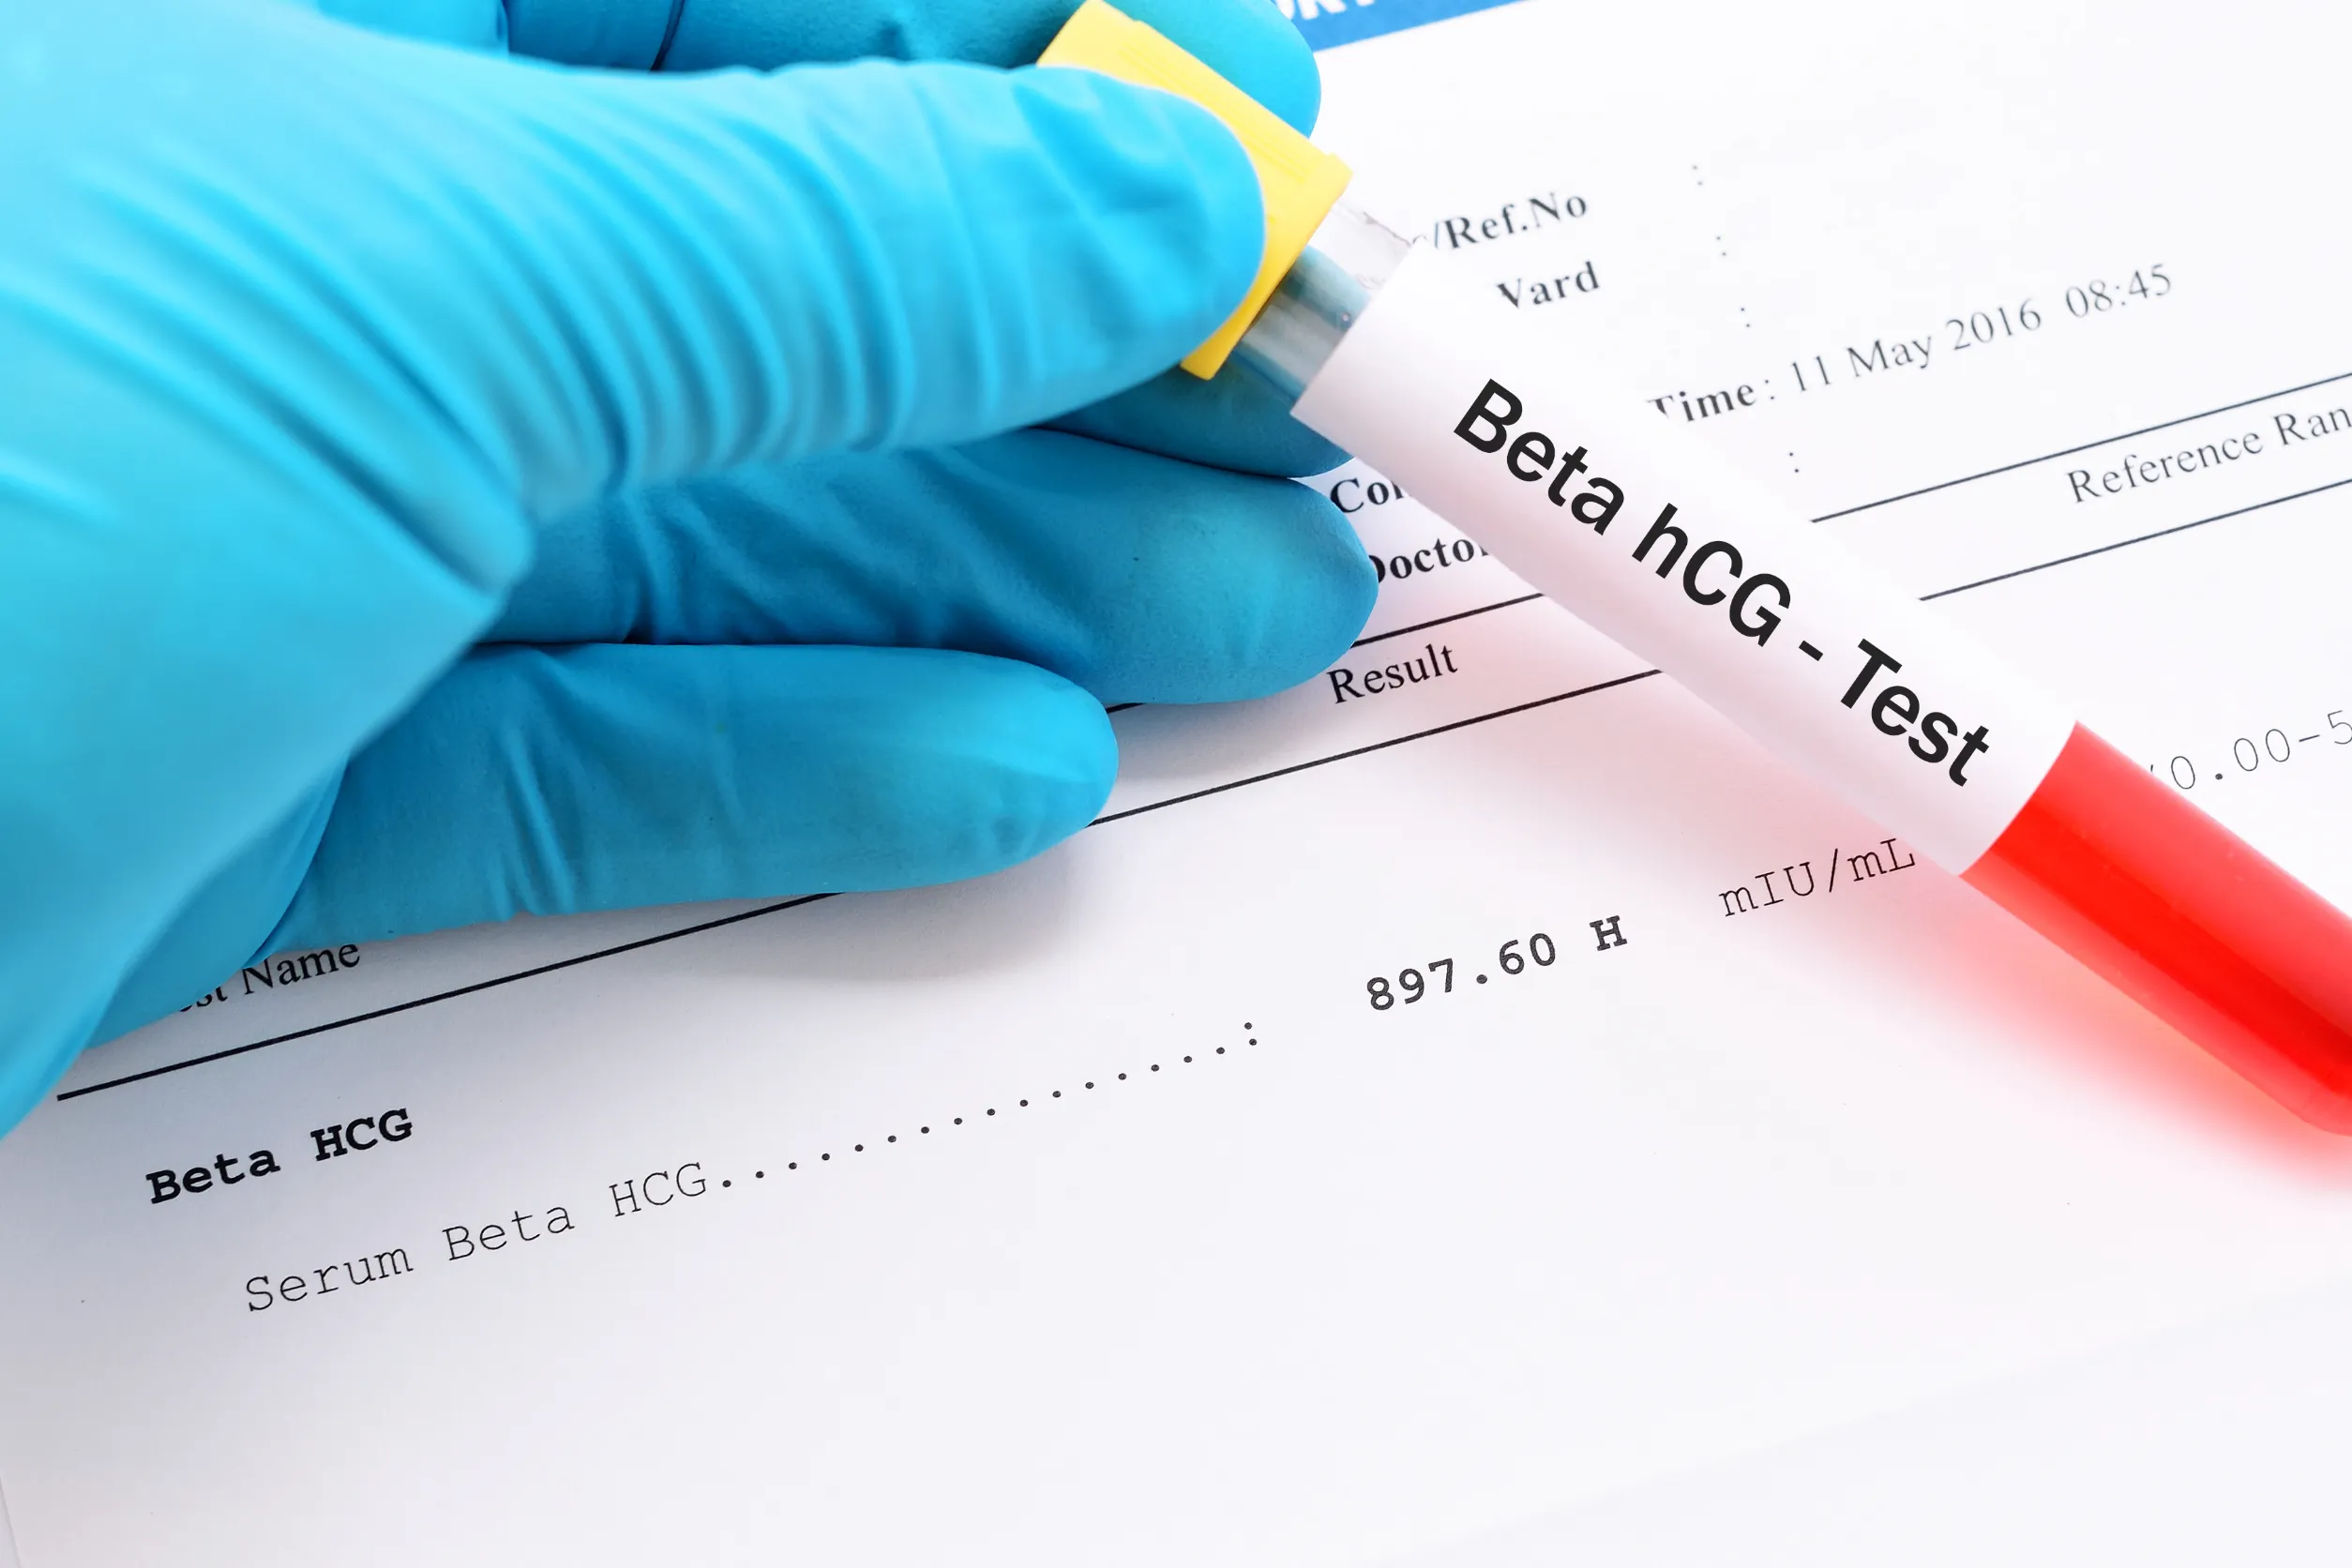 Beta hCG test vial held over paper